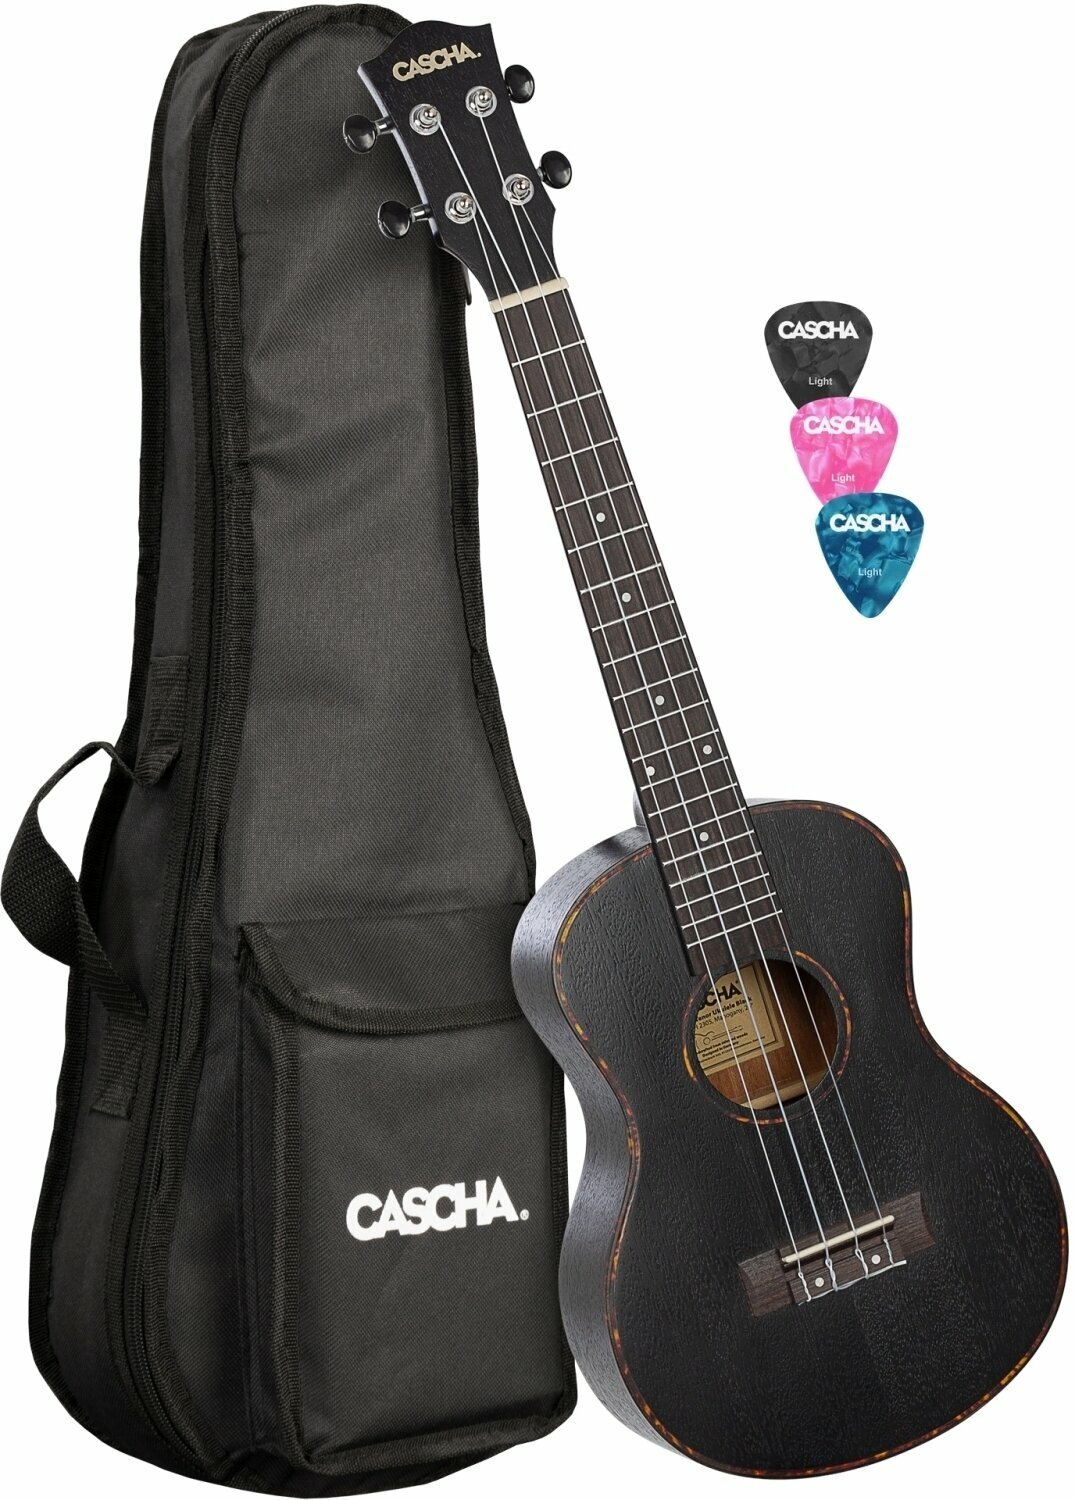 Tenori-ukulele Cascha HH 2305L Tenori-ukulele Black